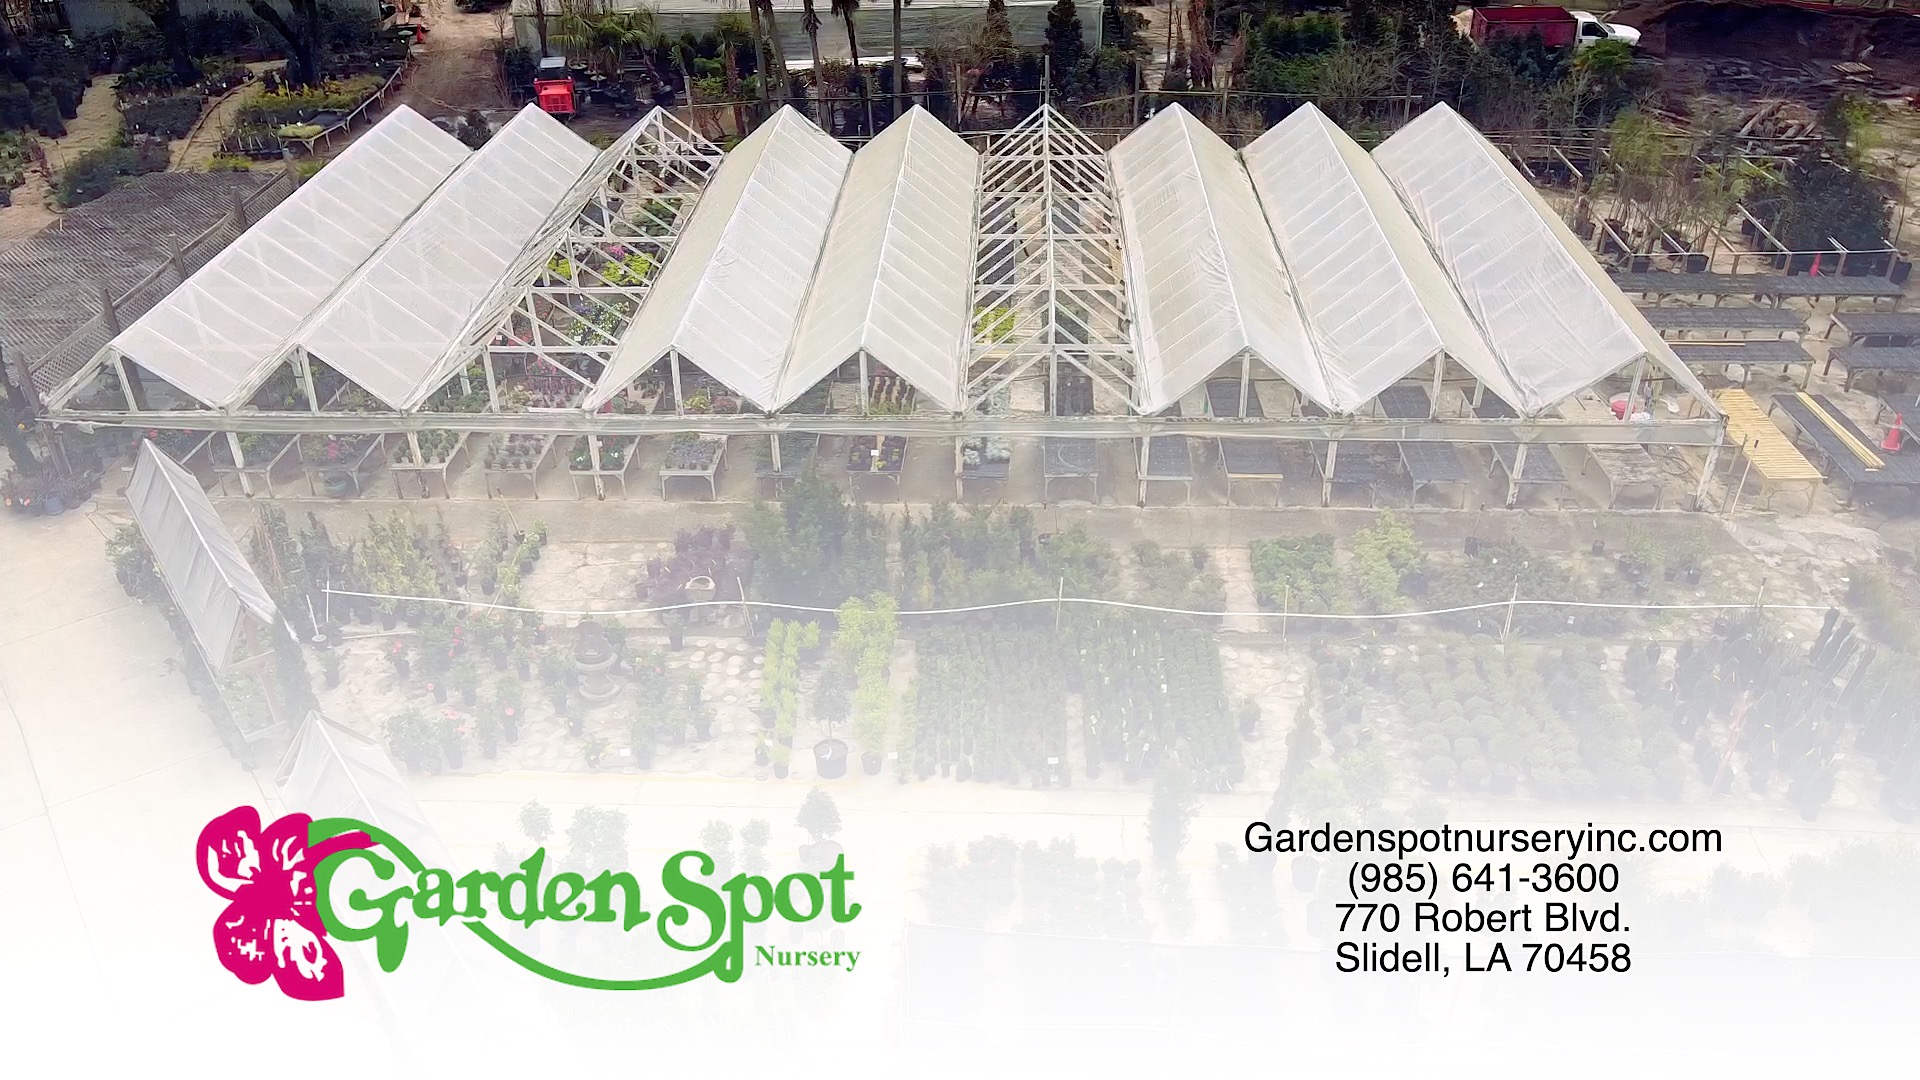 Garden Spot Nursery Slidell La - Home